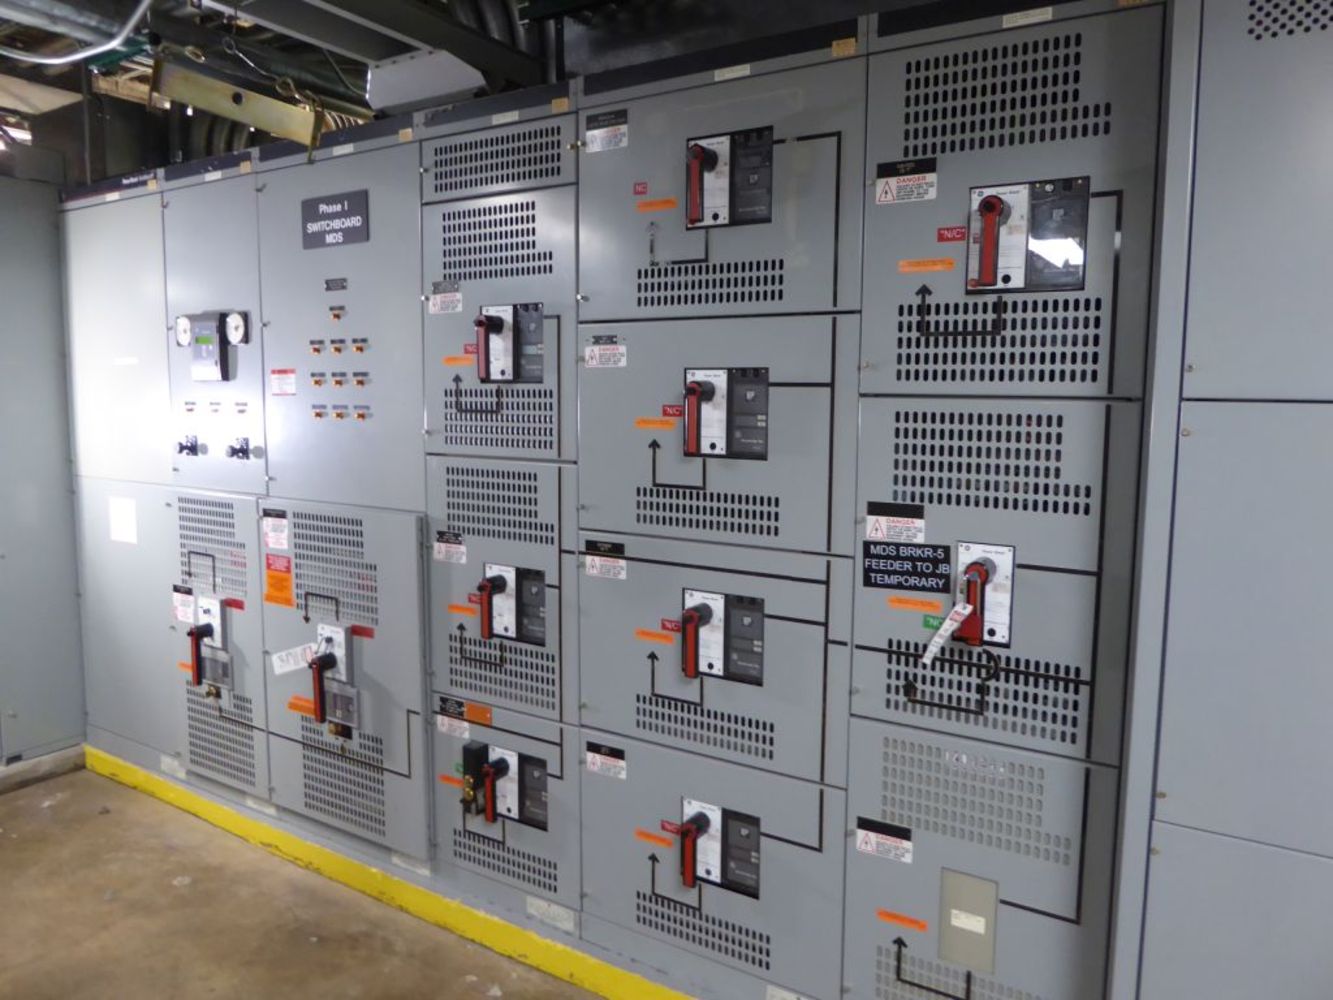 Data Center Equipment - Switchgear, Generators, UPS Equipment and More Located in Multiple Locations